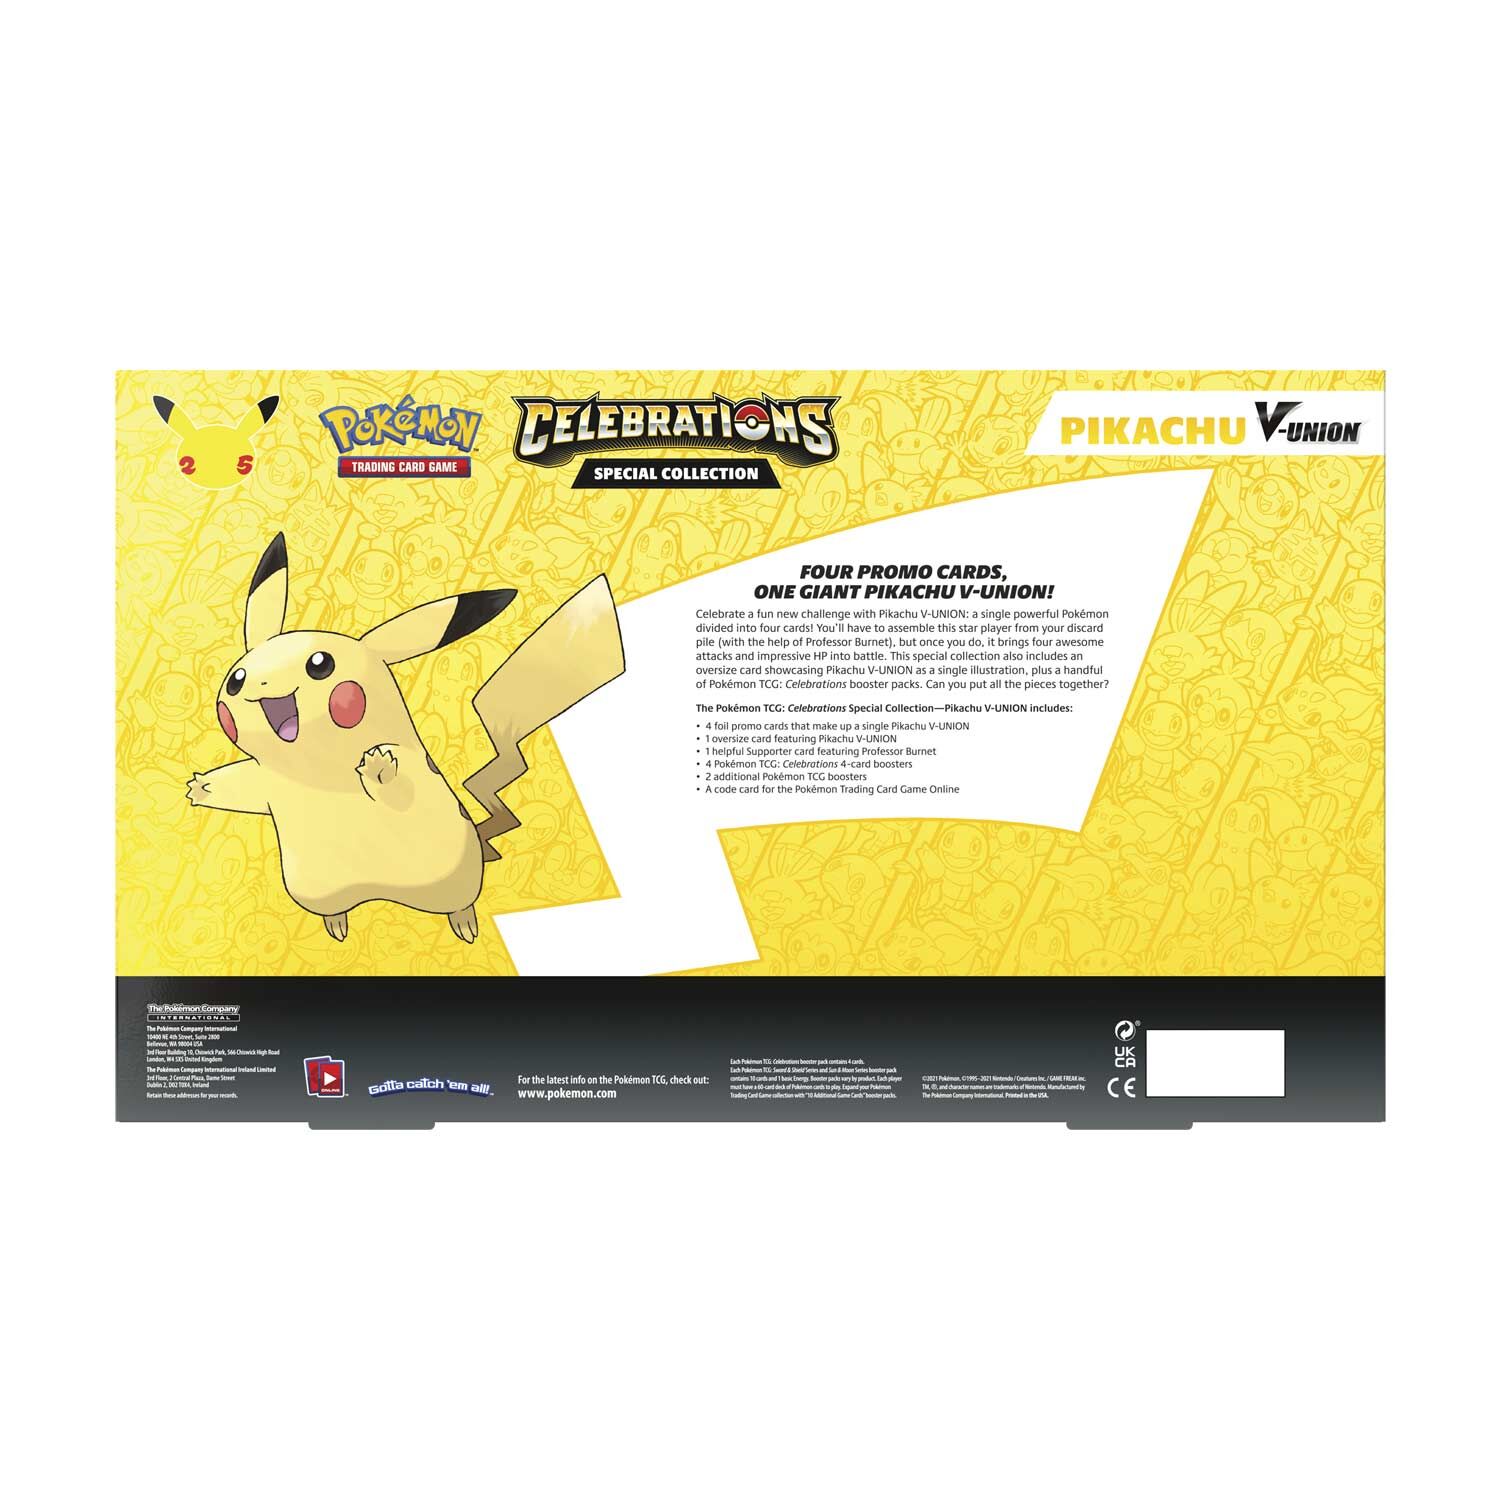 Pokémon 25th Anniversary Celebrations Pikachu V UNION Box - EN